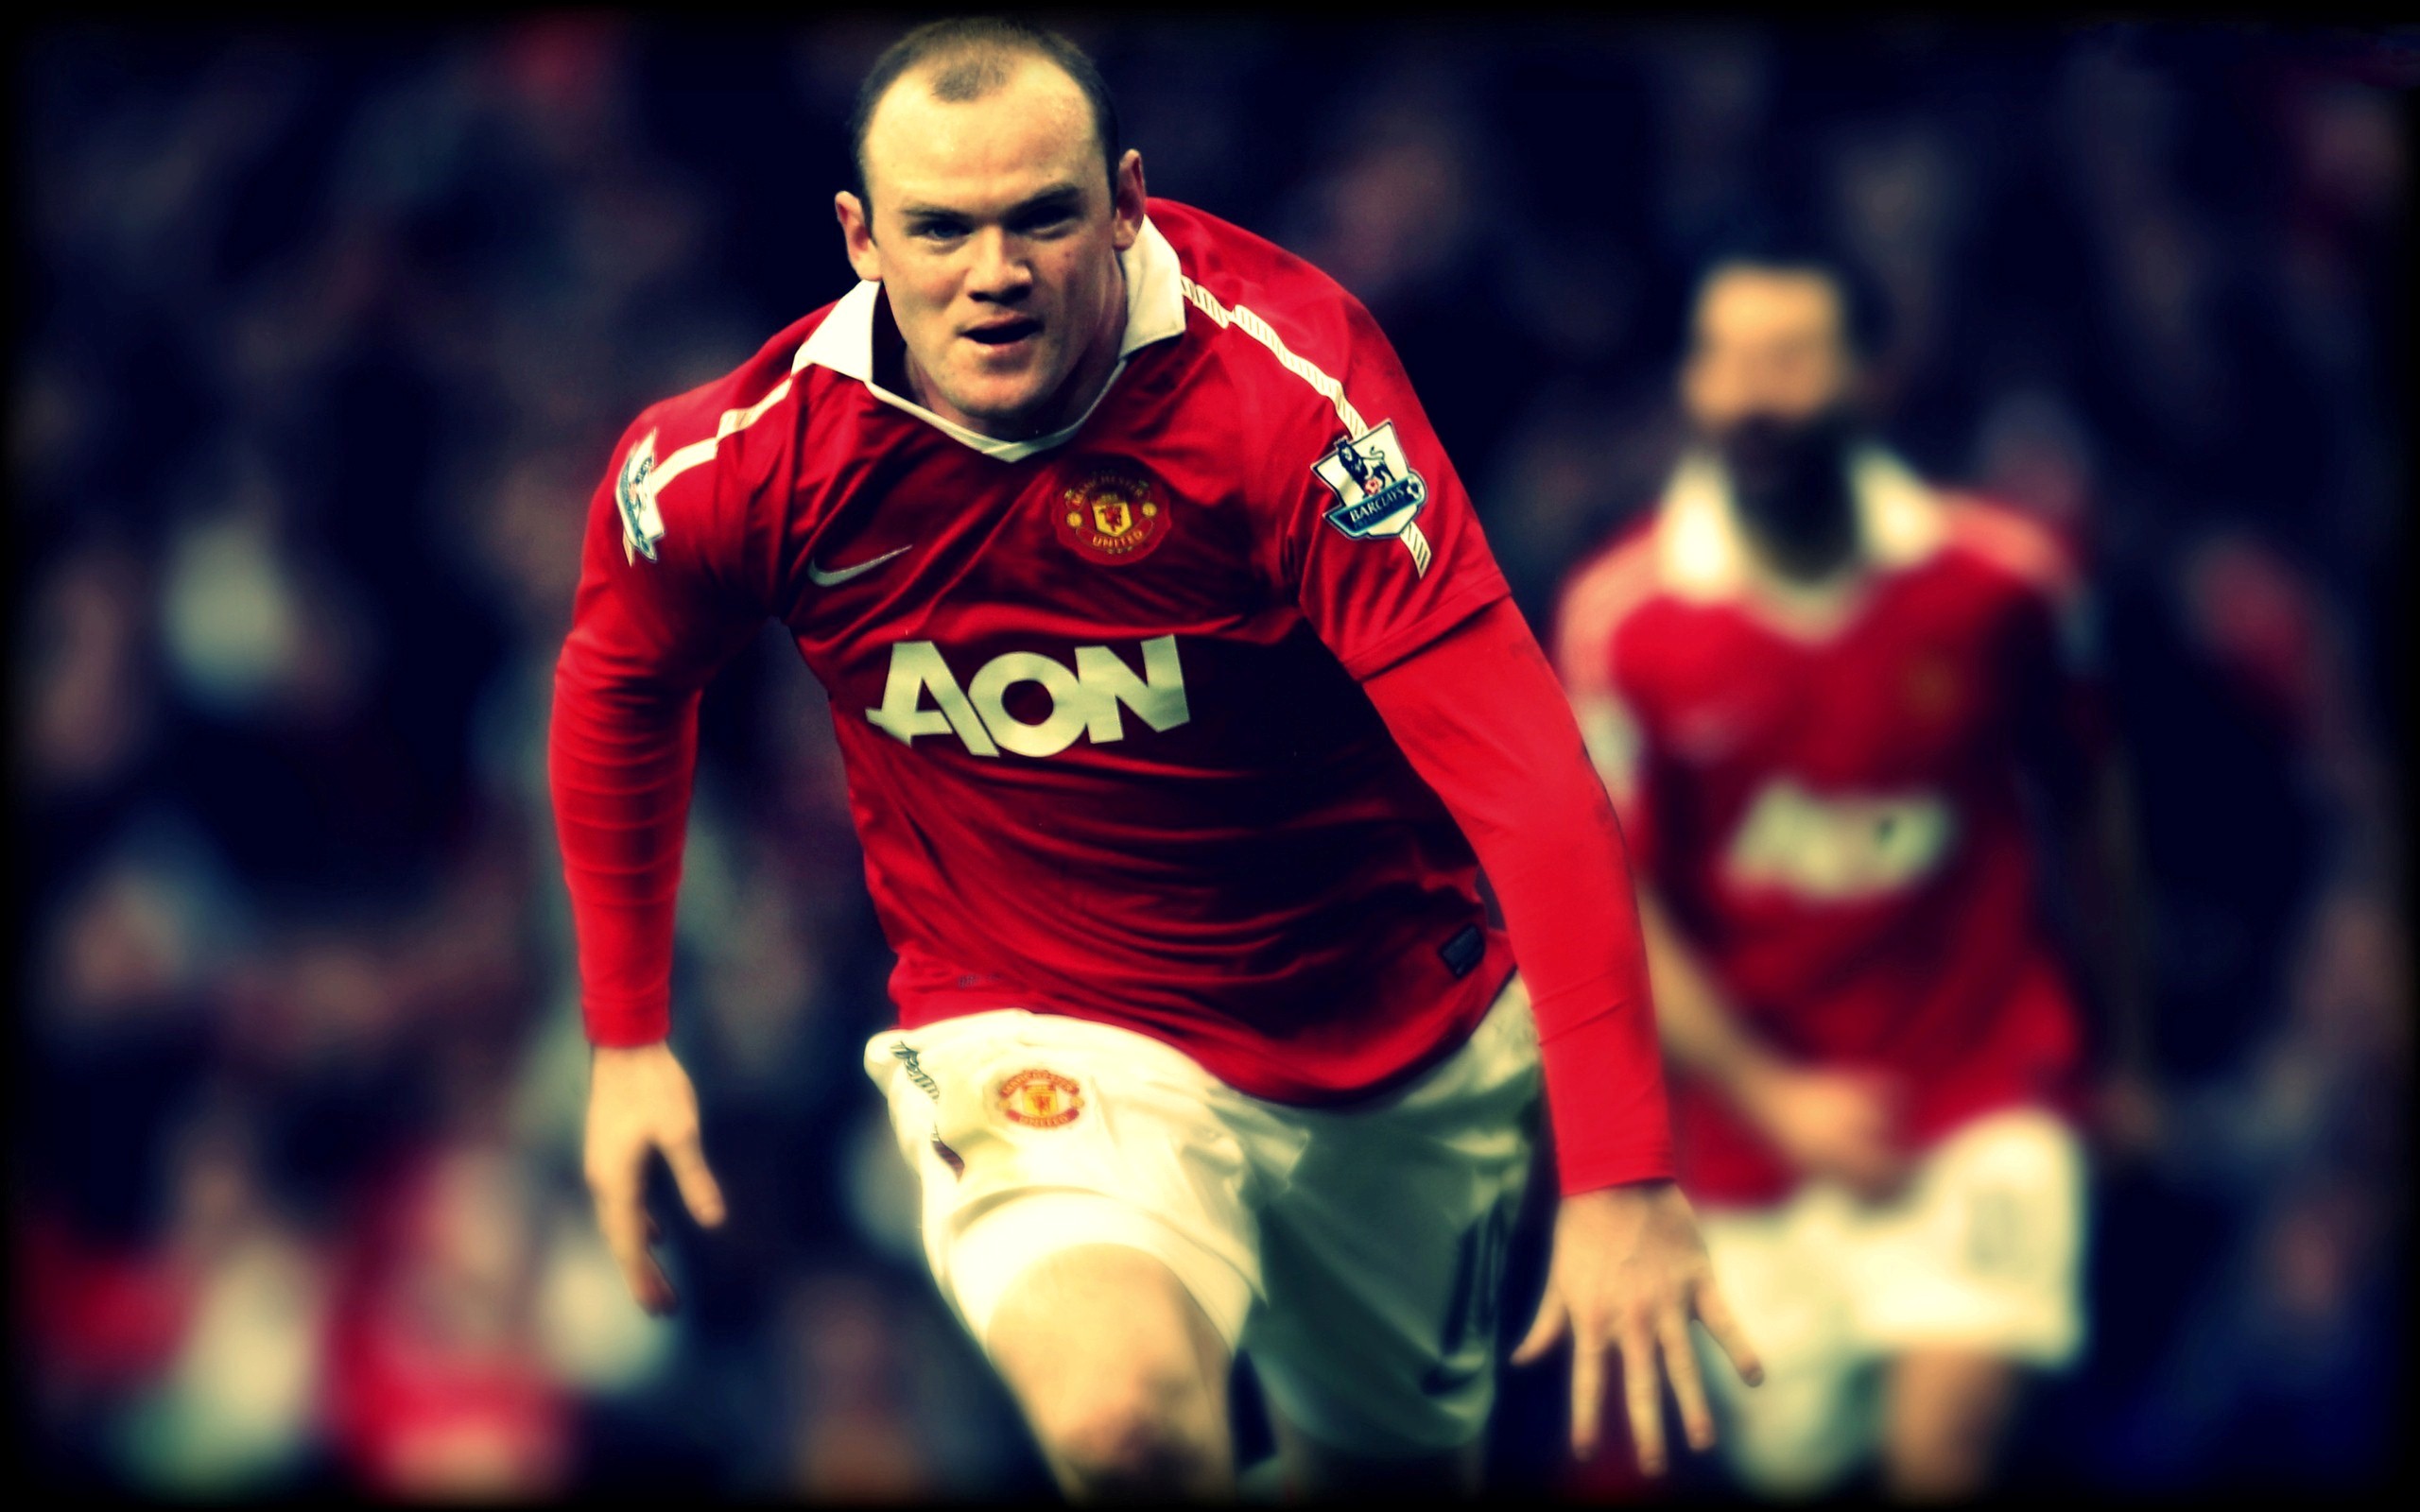 Wayne Rooney Football Player HD Wallpapers